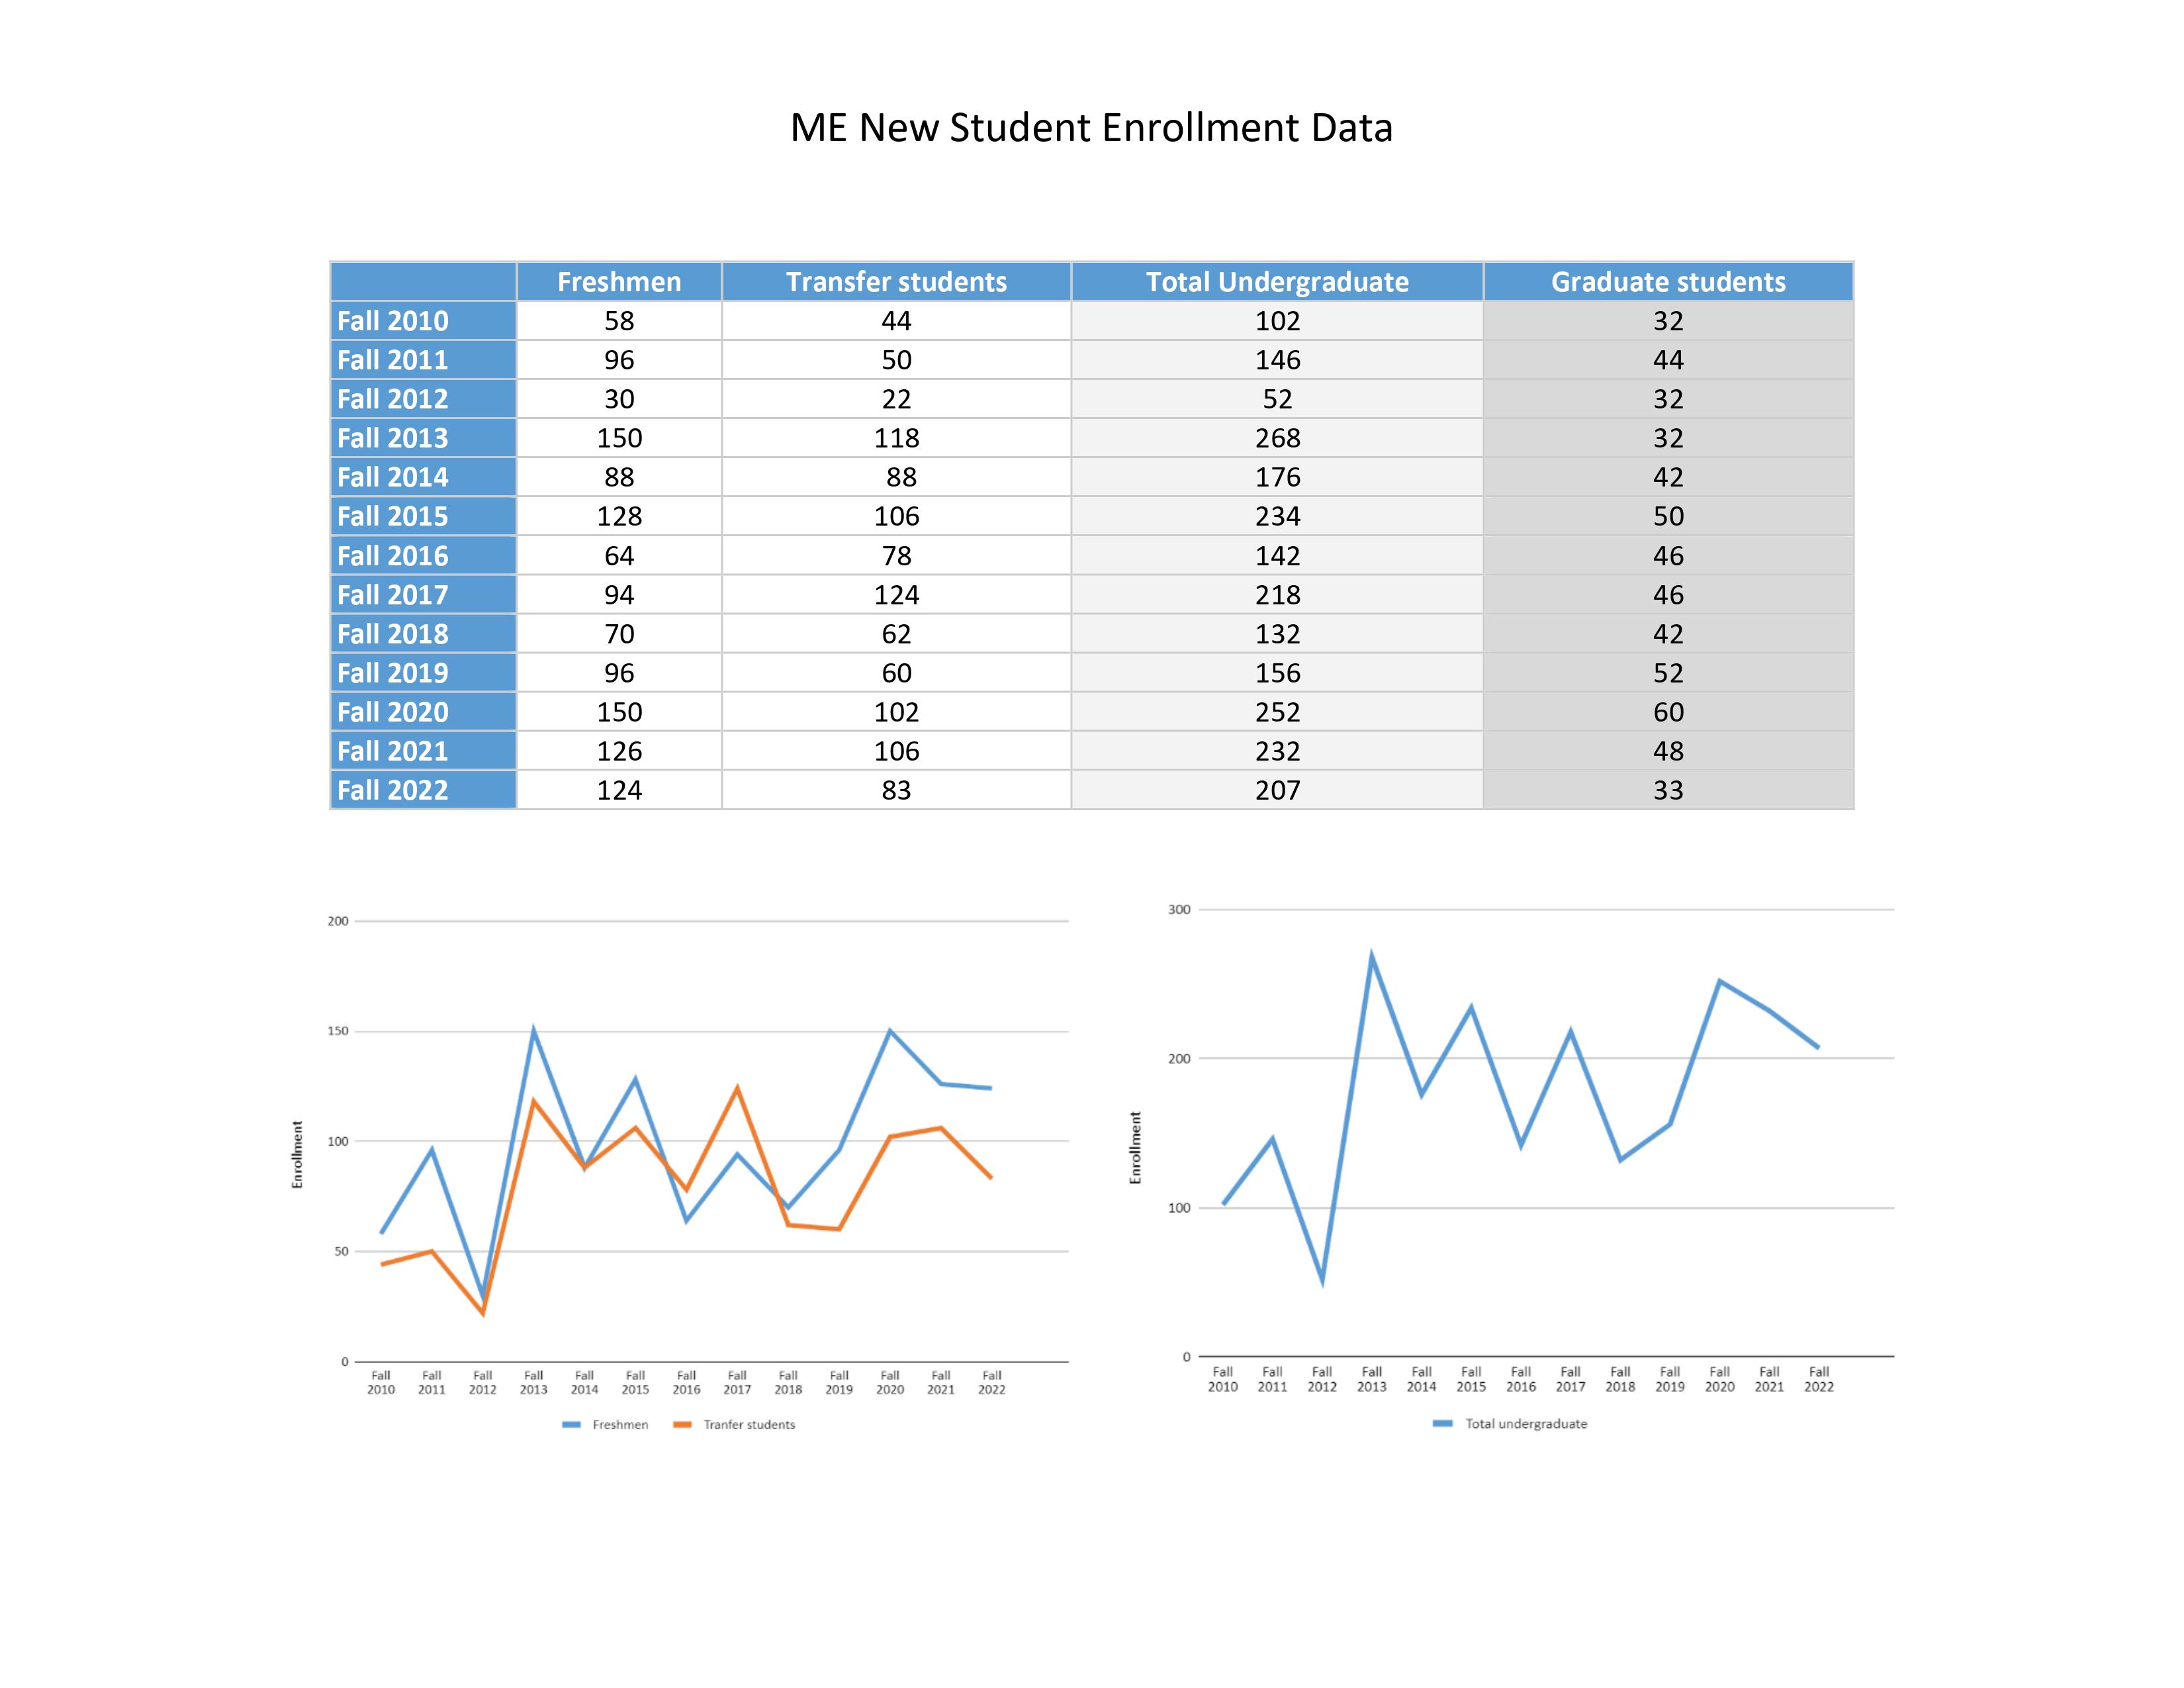 data regarding new student enrollment